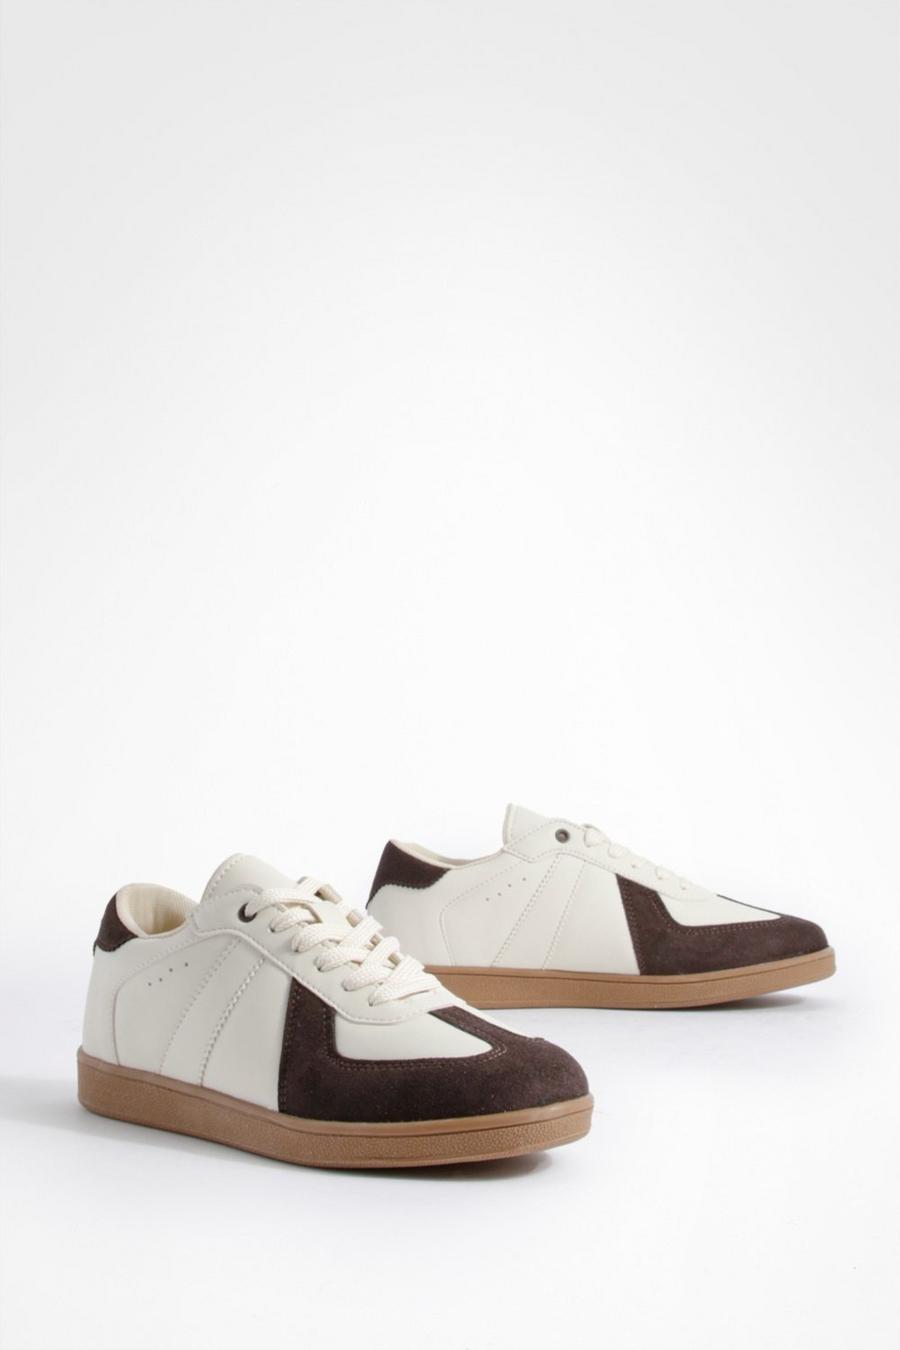 Cream white Contrast Panel Gum Sole Flat Sneakers